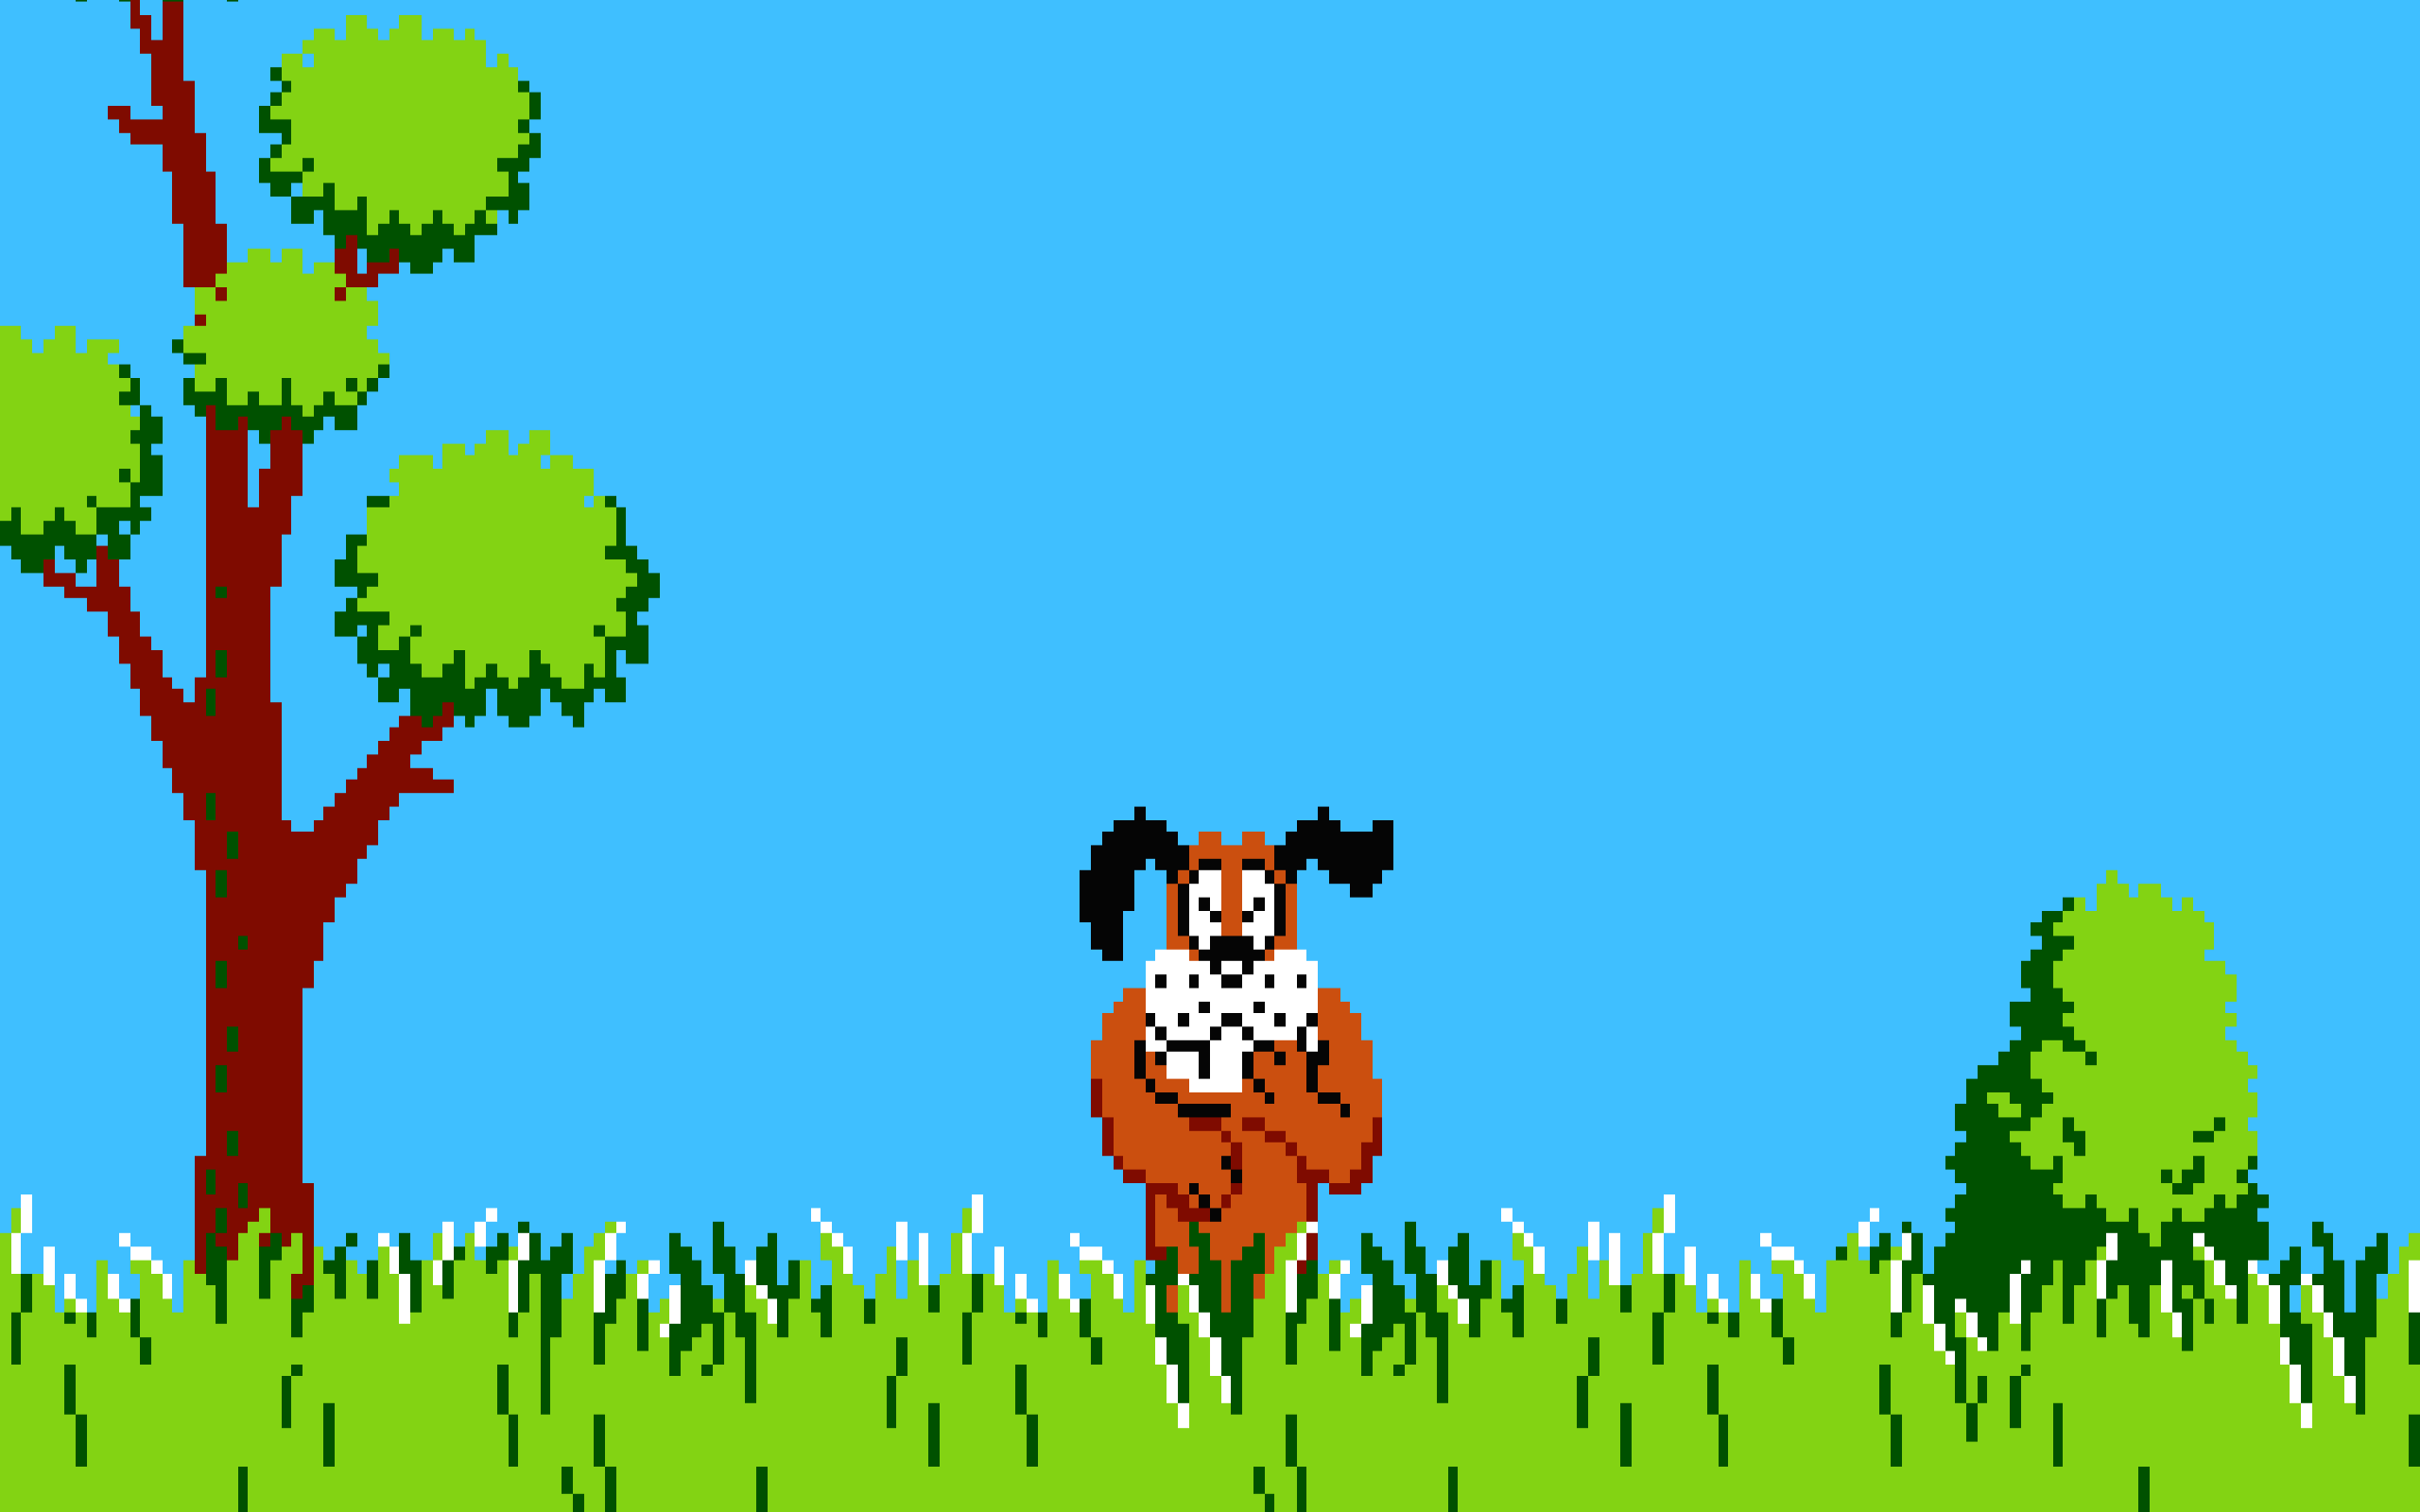 General 2560x1600 Duck Hunt 8-bit Nintendo Entertainment System dog nostalgia video games pixels digital art screen shot